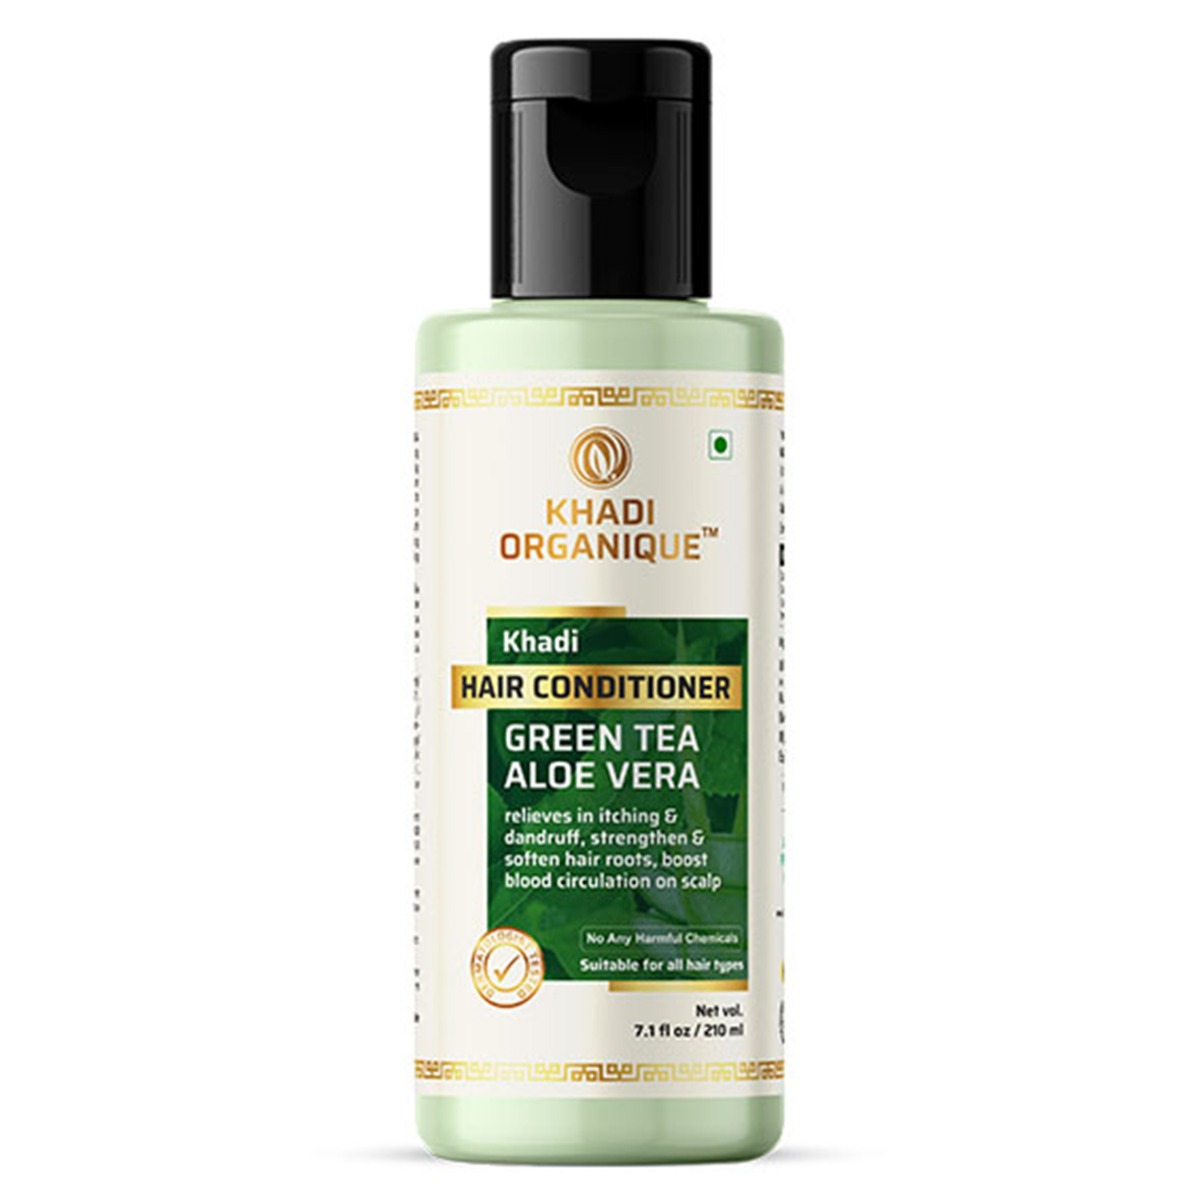 Khadi Organique Green Tea Aloe vera Hair Conditioner, 210ml